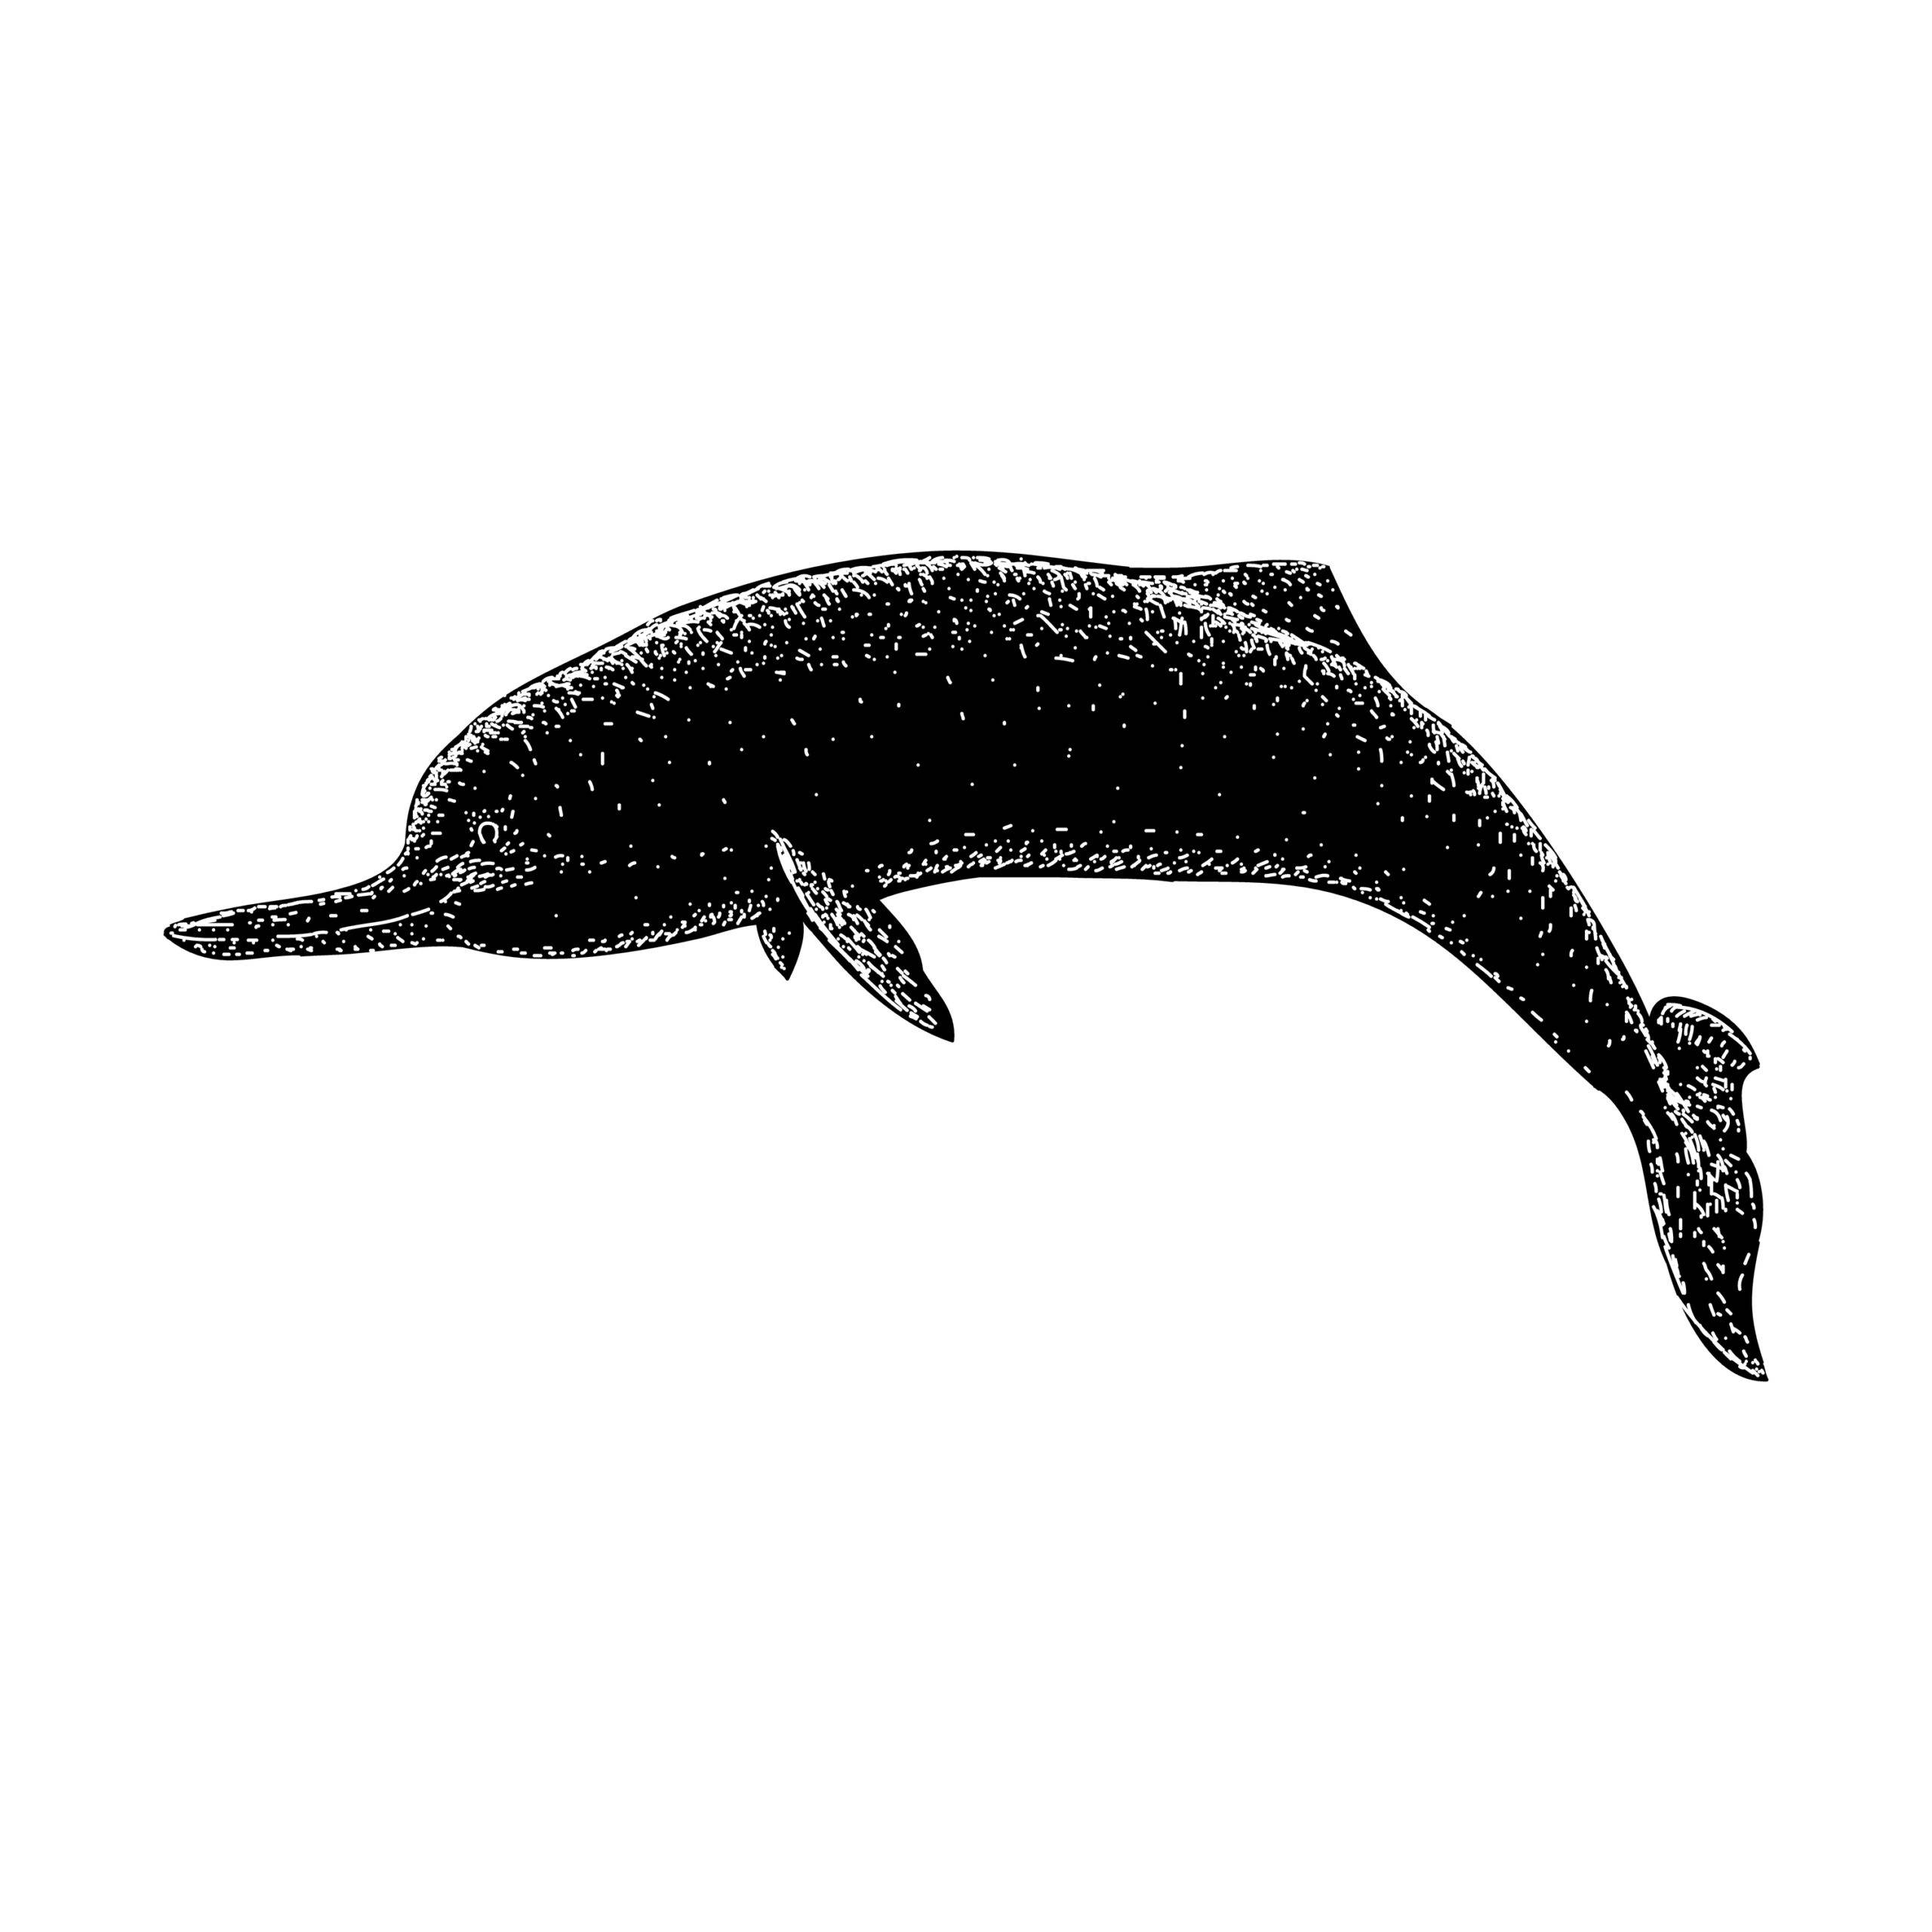 Baiji river dolphin illustration